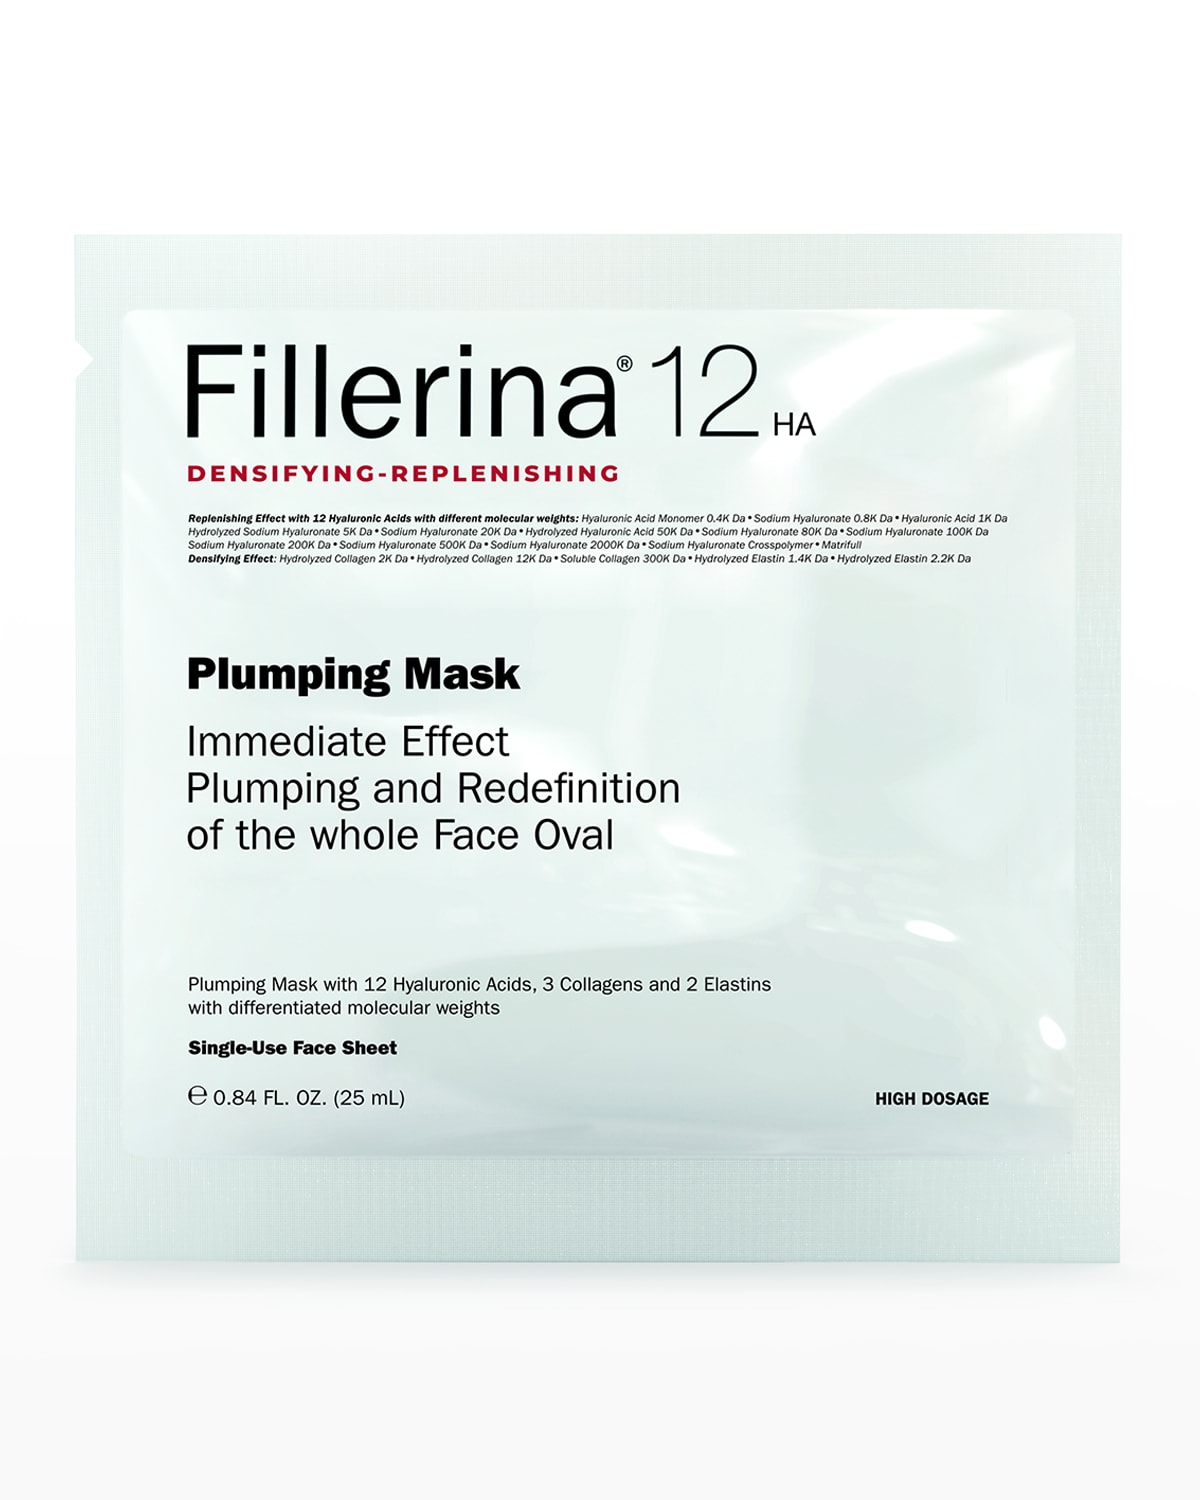 Fillerina 12HA Densifying Plumping Mask, 0.84 oz.